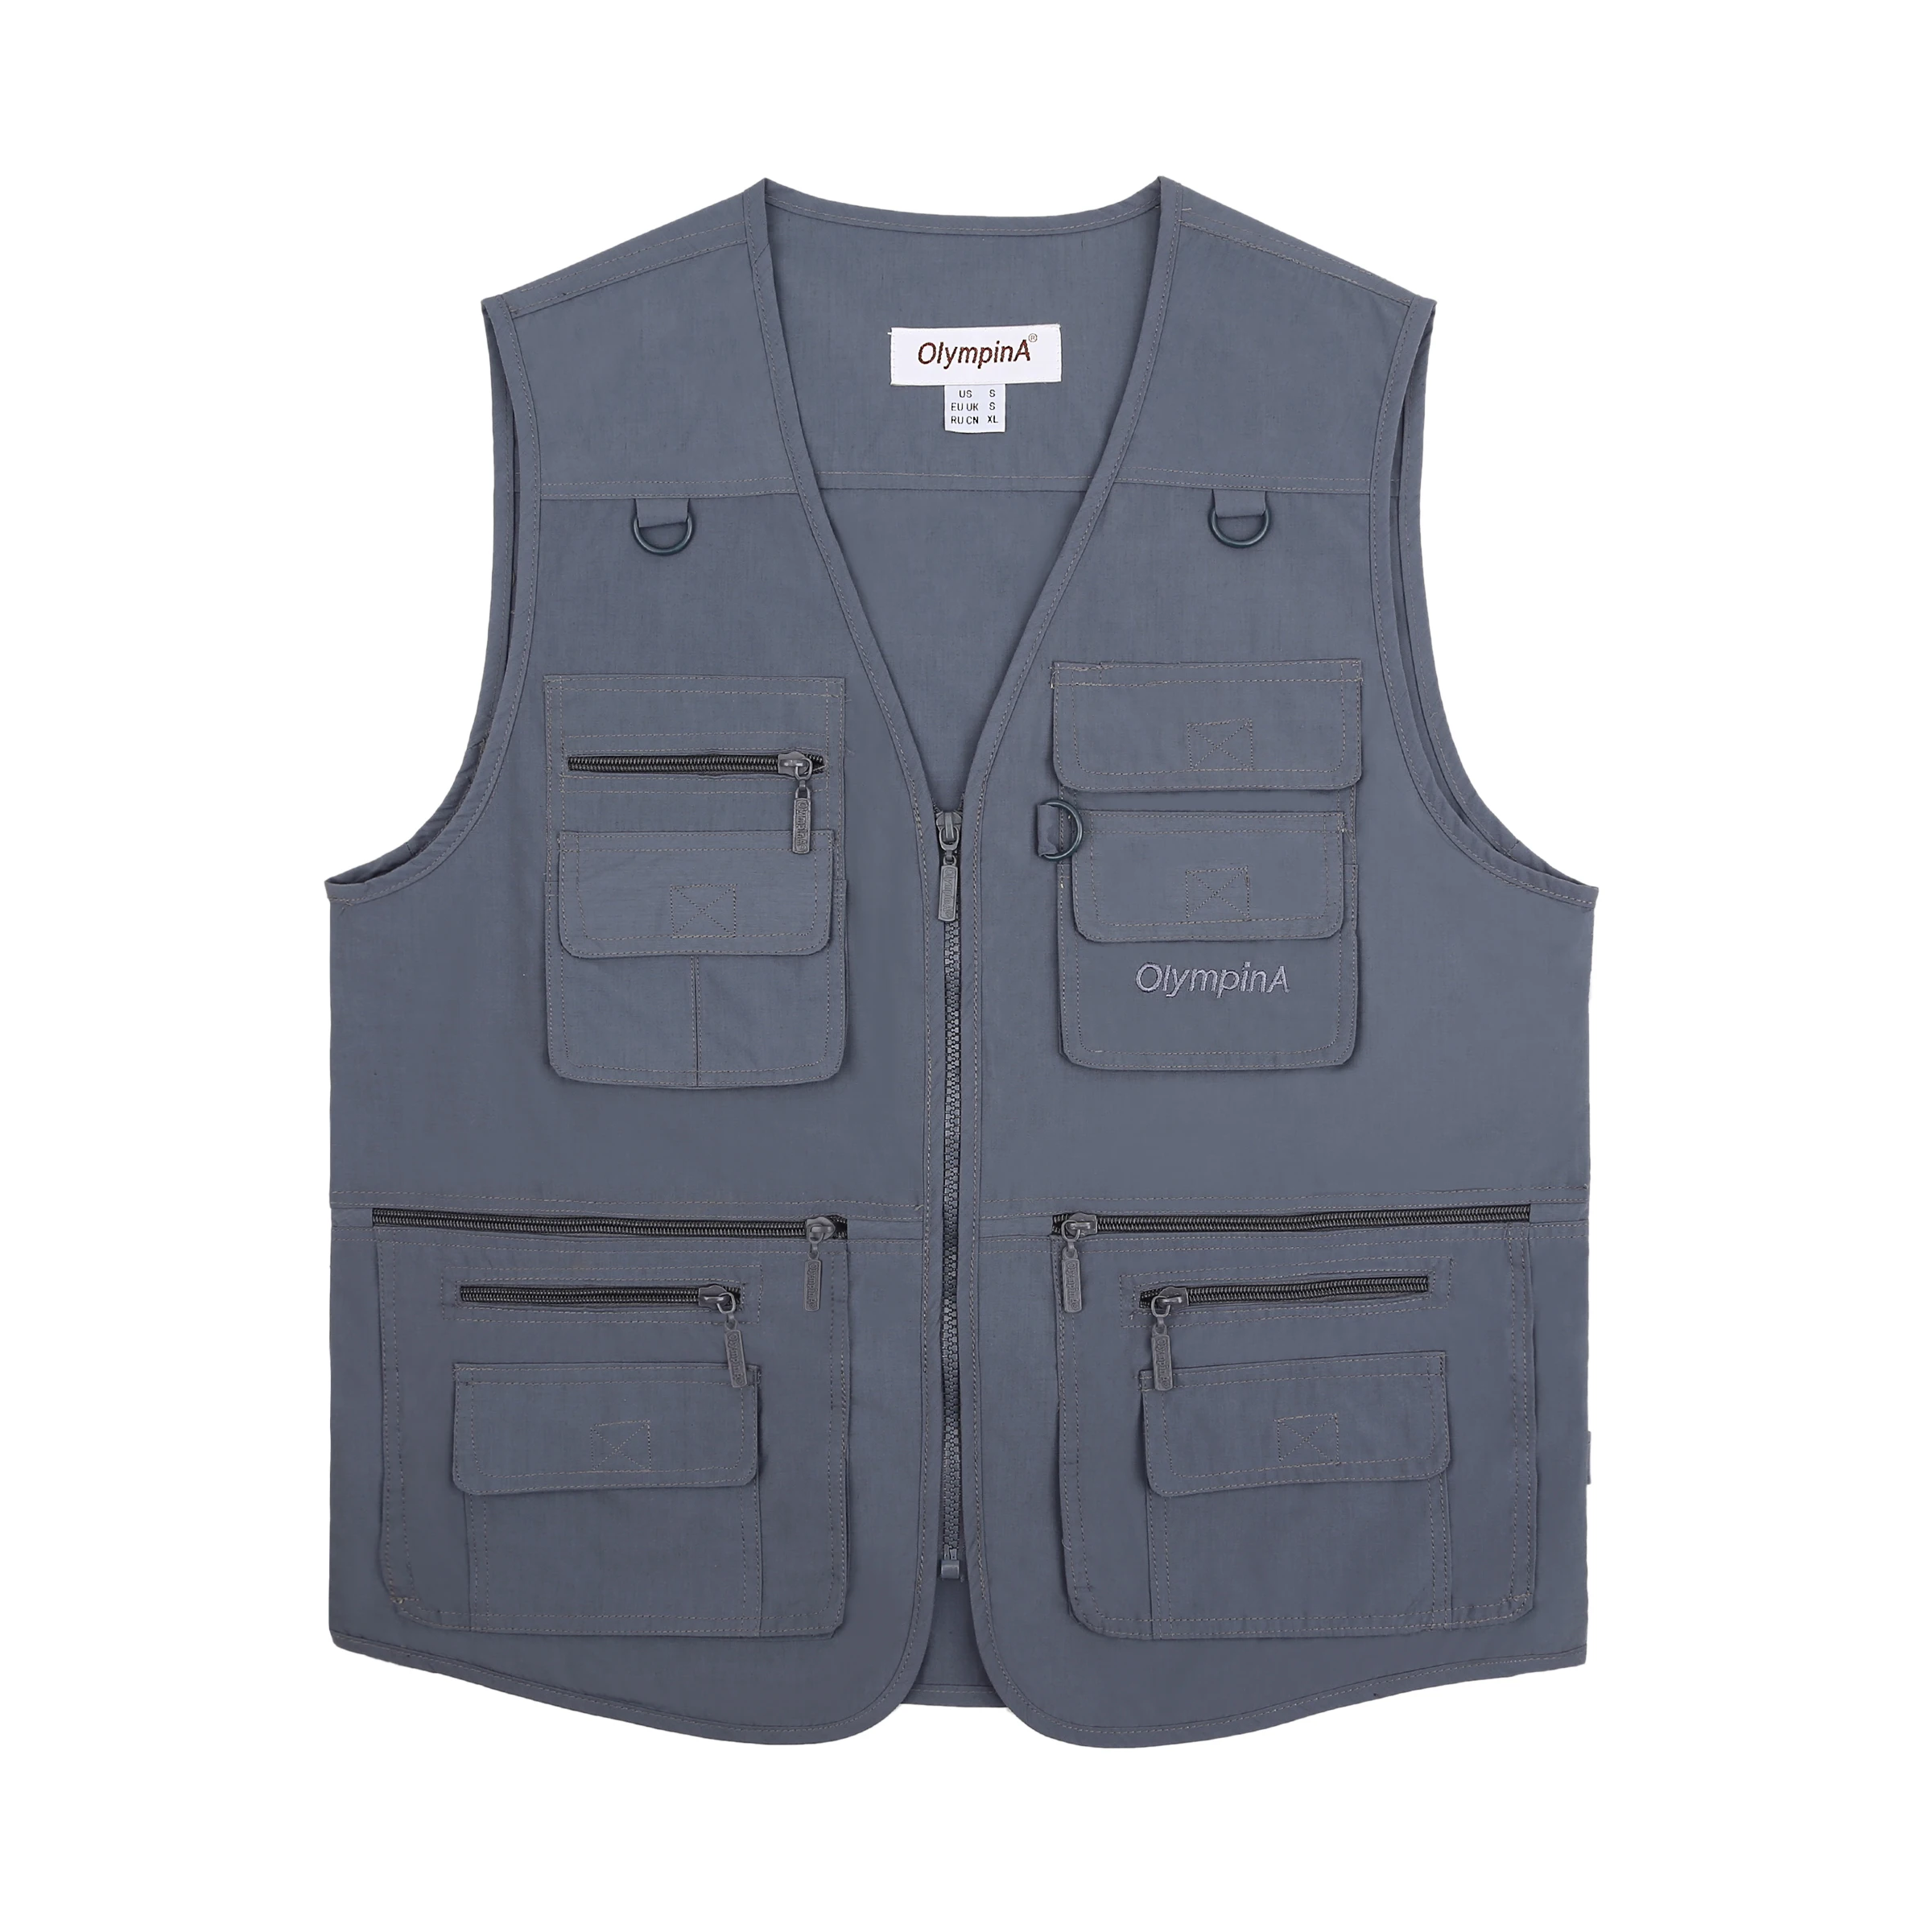 Fishing Vest Men Summer Traveler Sleeveless Jackets Waistcoat Outdoors Casual Vest With Many Pockets Large Size 5XL